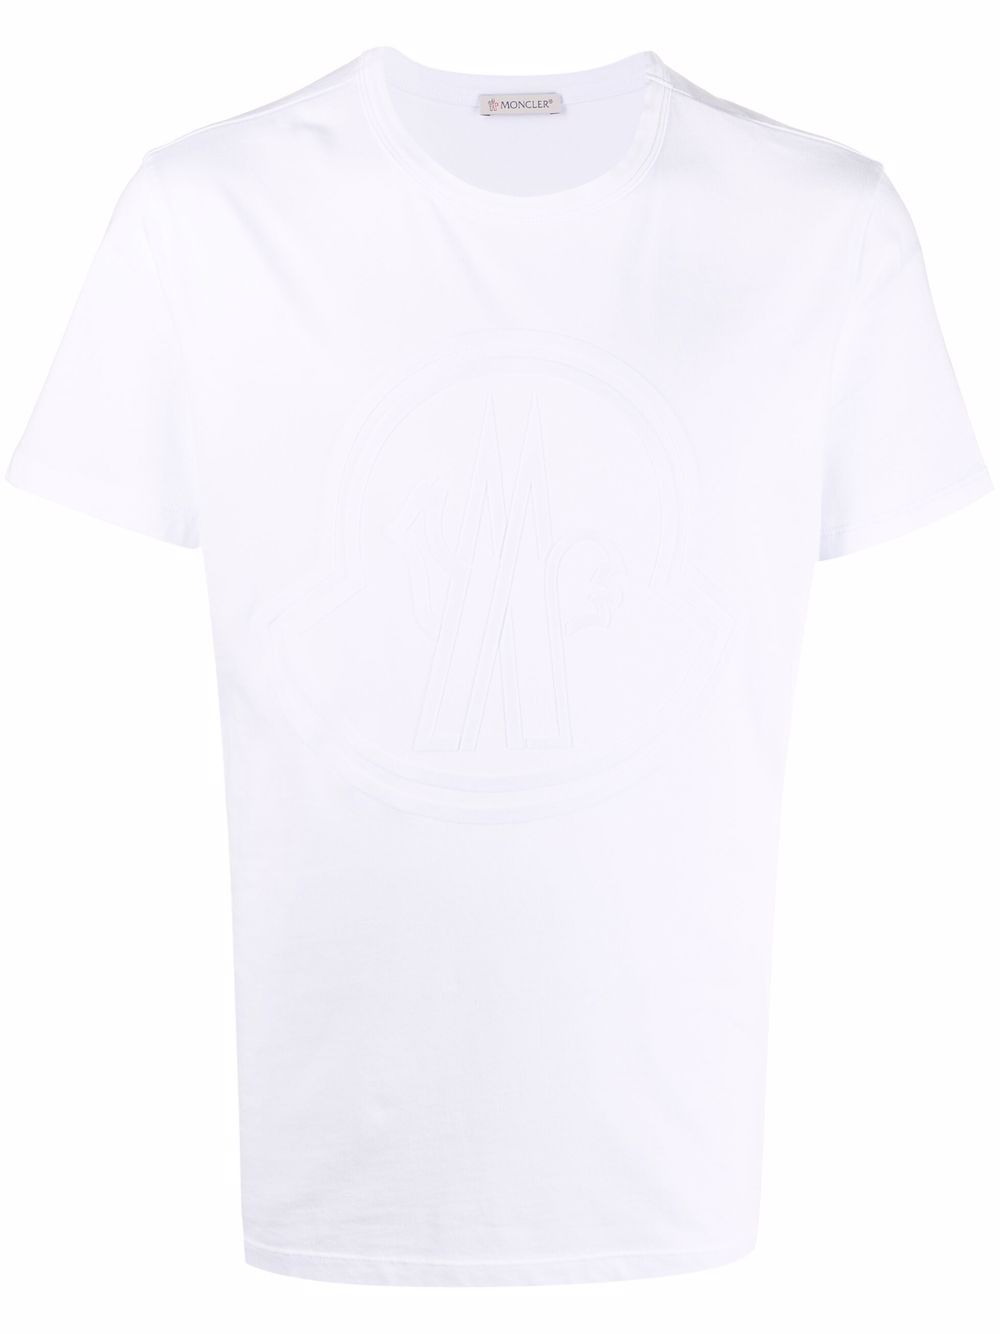 фото Moncler футболка с тисненым логотипом